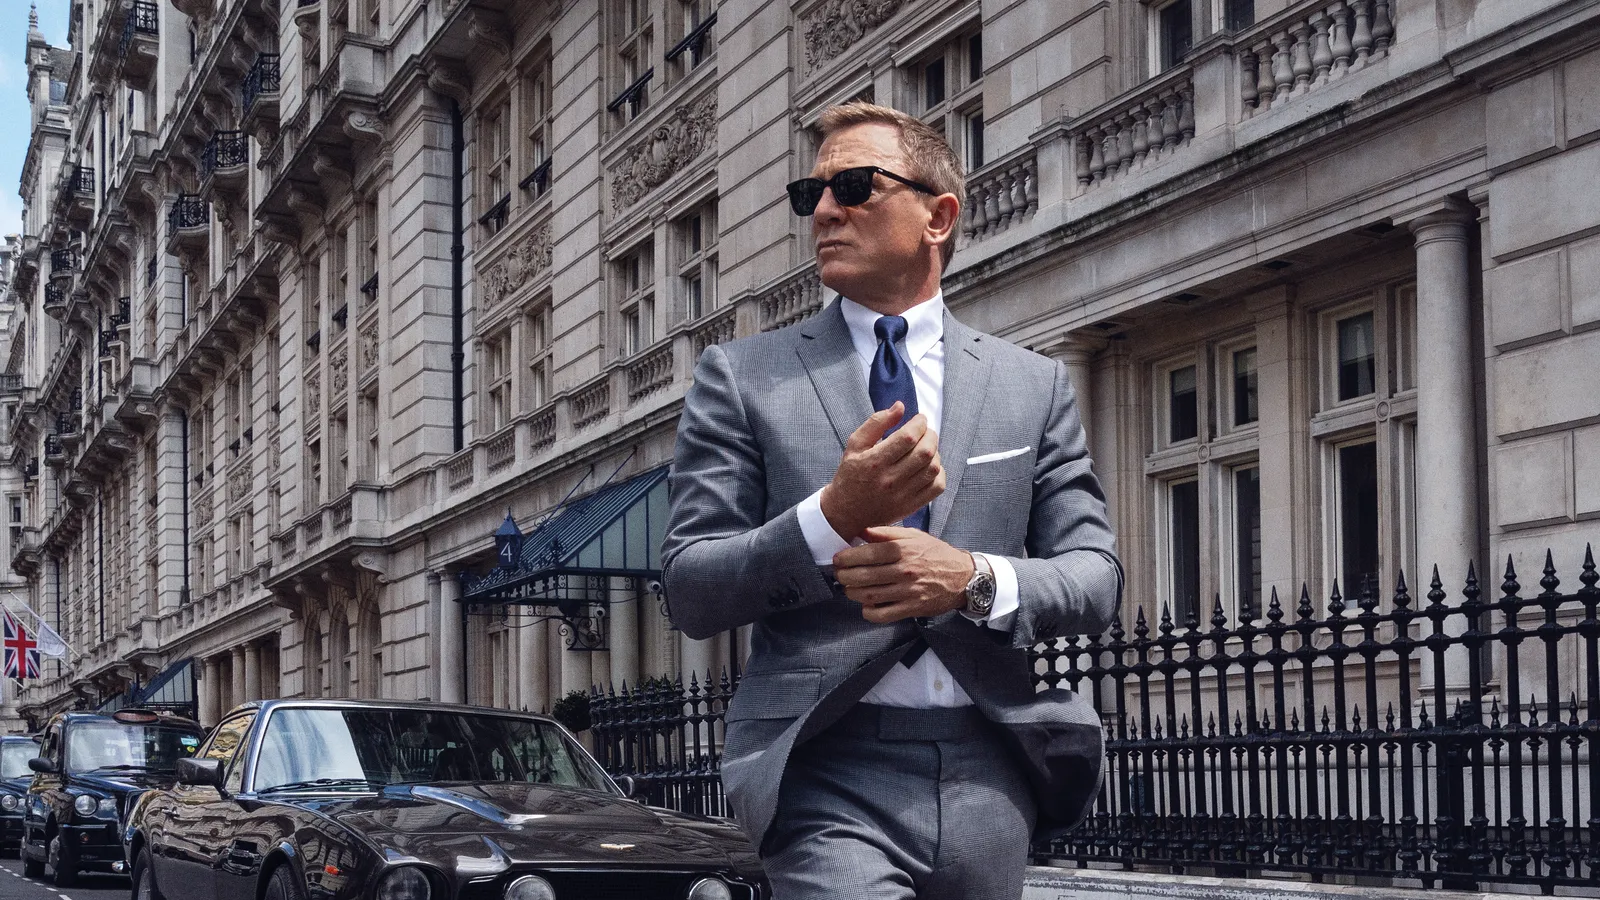 James Bond Wearing a Gray Suit